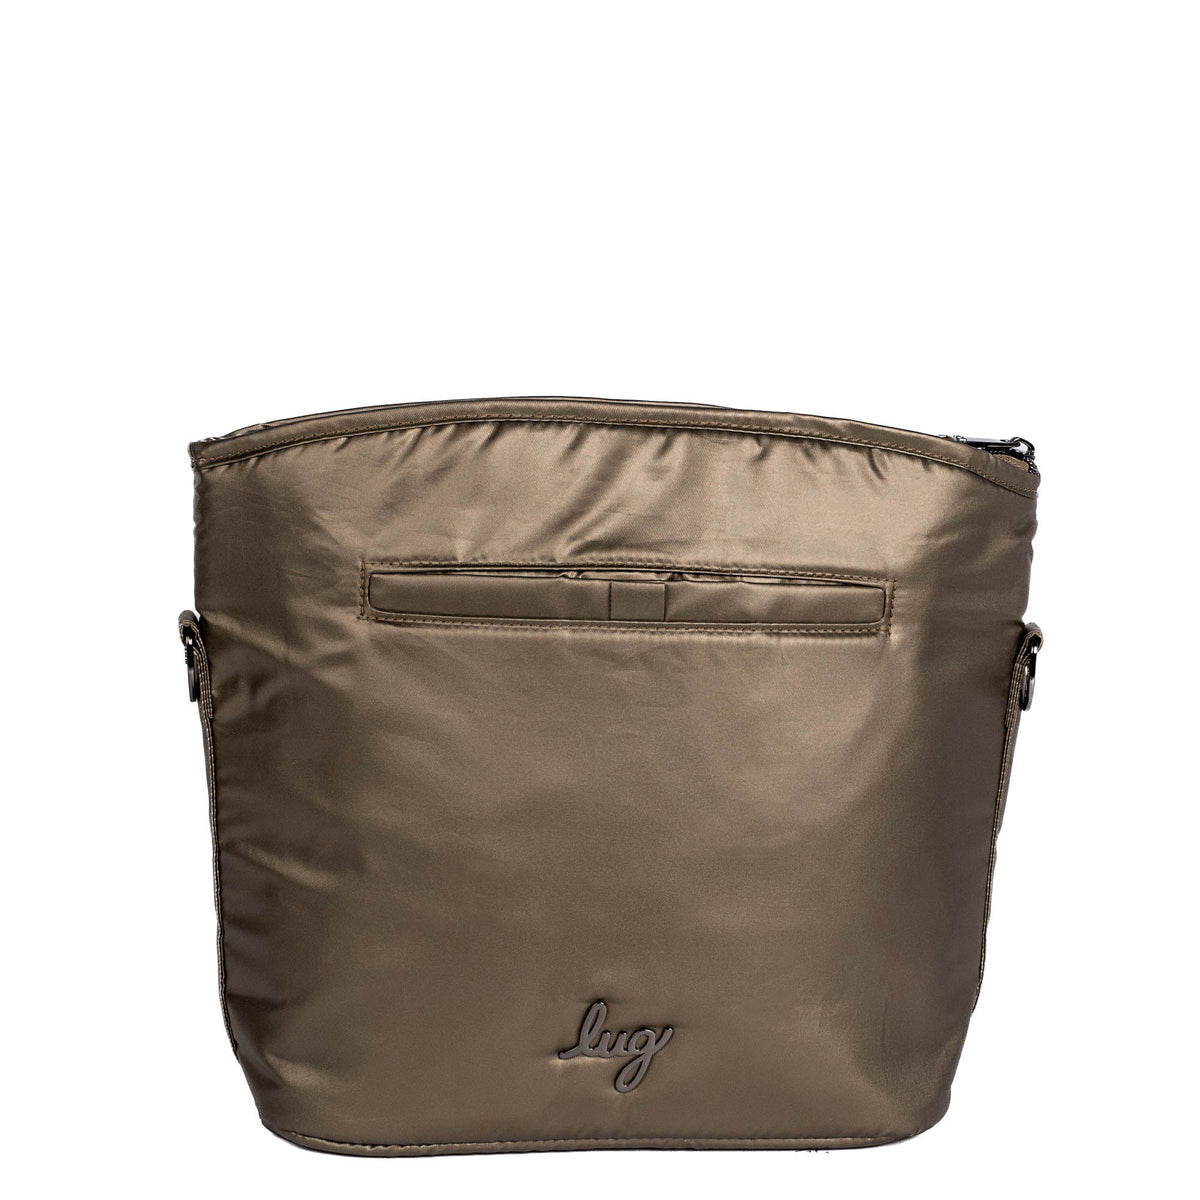 Adagio Shoulder Bag